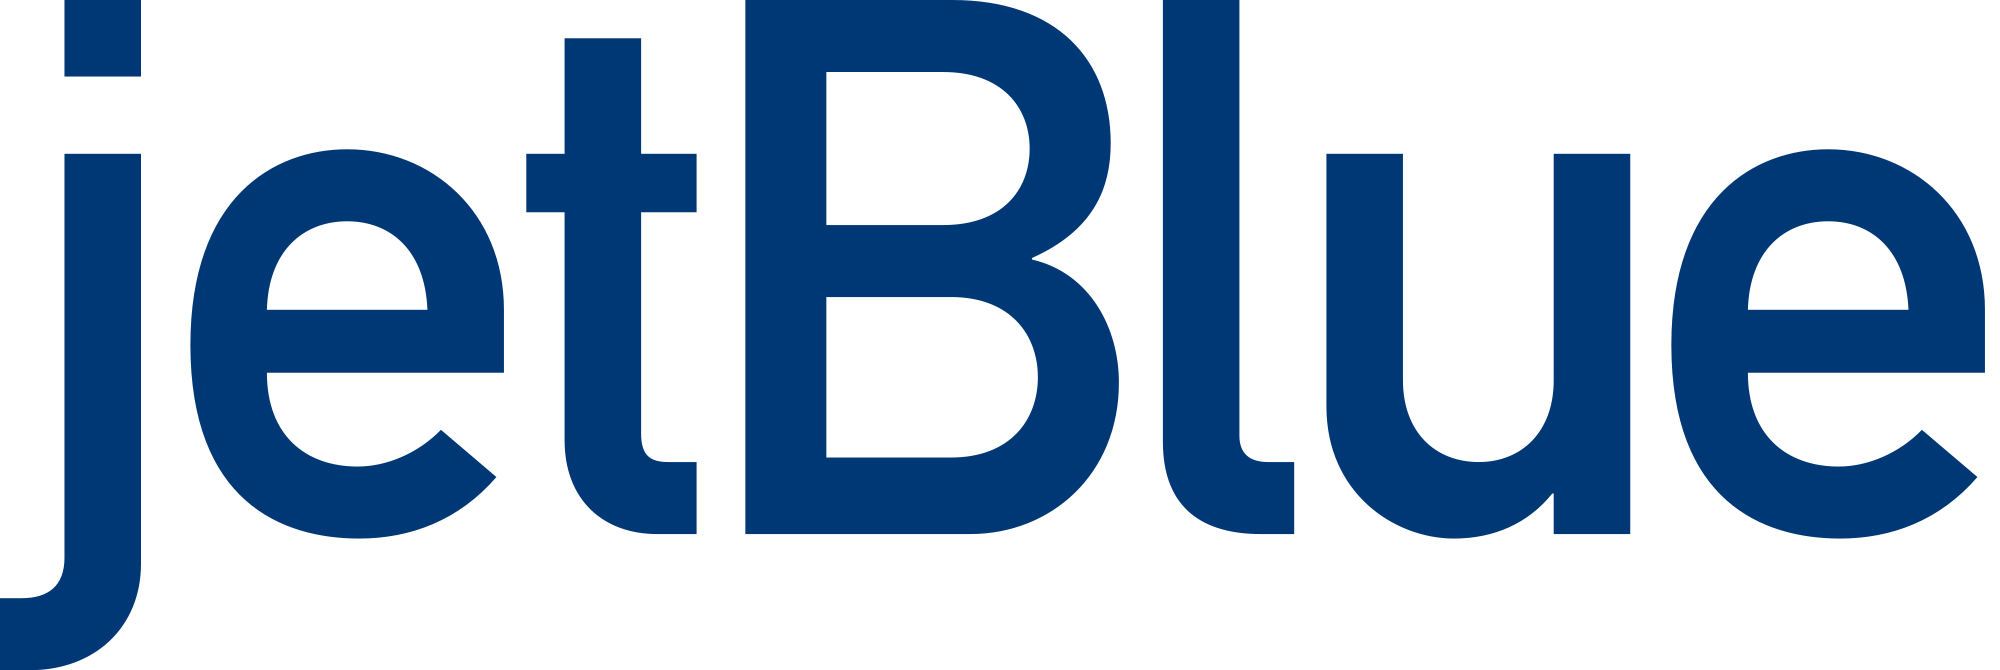 JetBlue Logo - JetBlue Airways Logo.svg